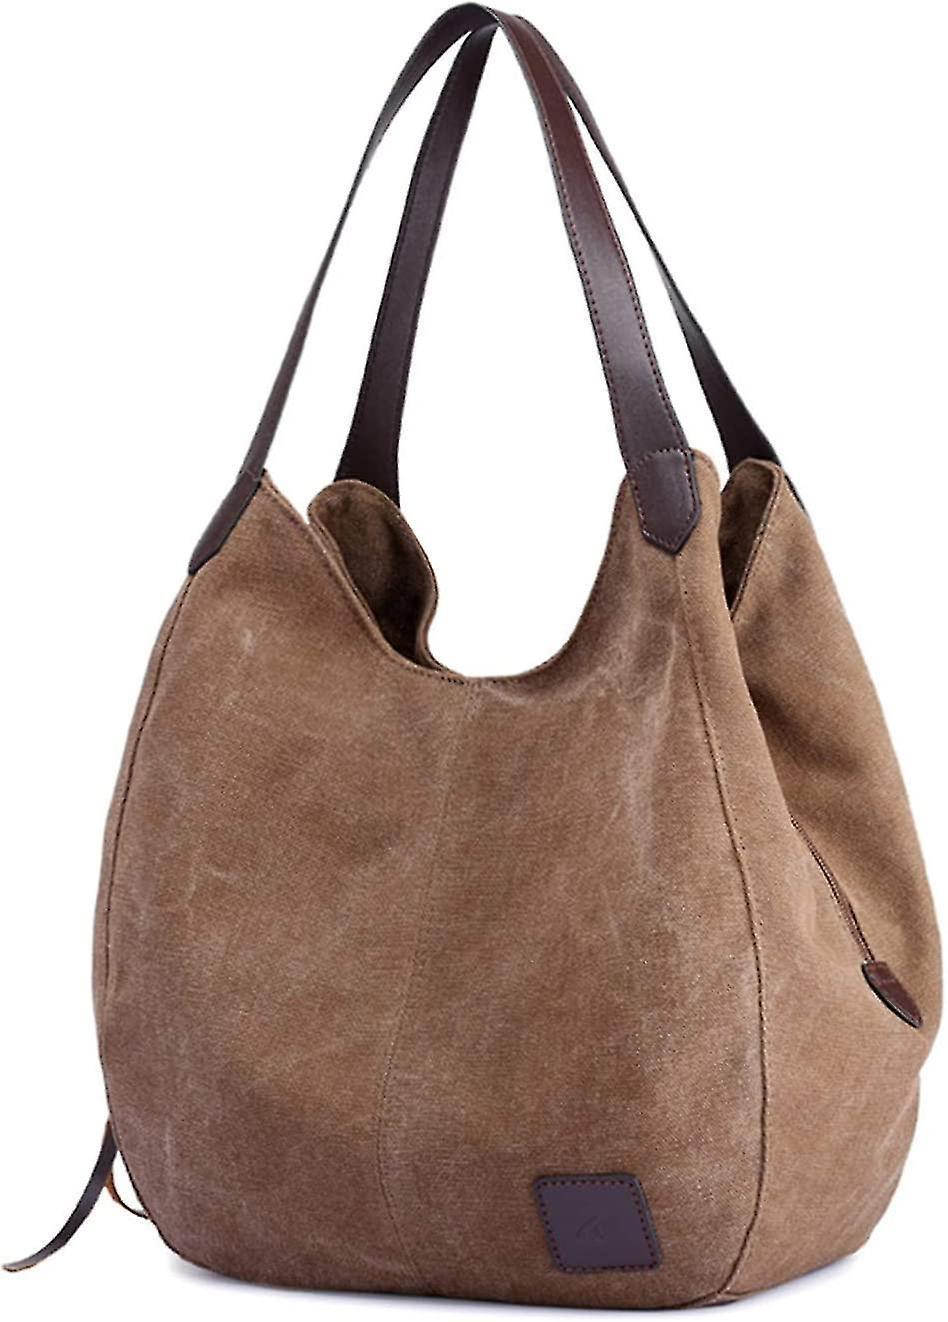 Crossbody Purse, Tote Bag, Travel Shoulder Bag, Fashion Purse Handbag, Crossbody Bags For Women